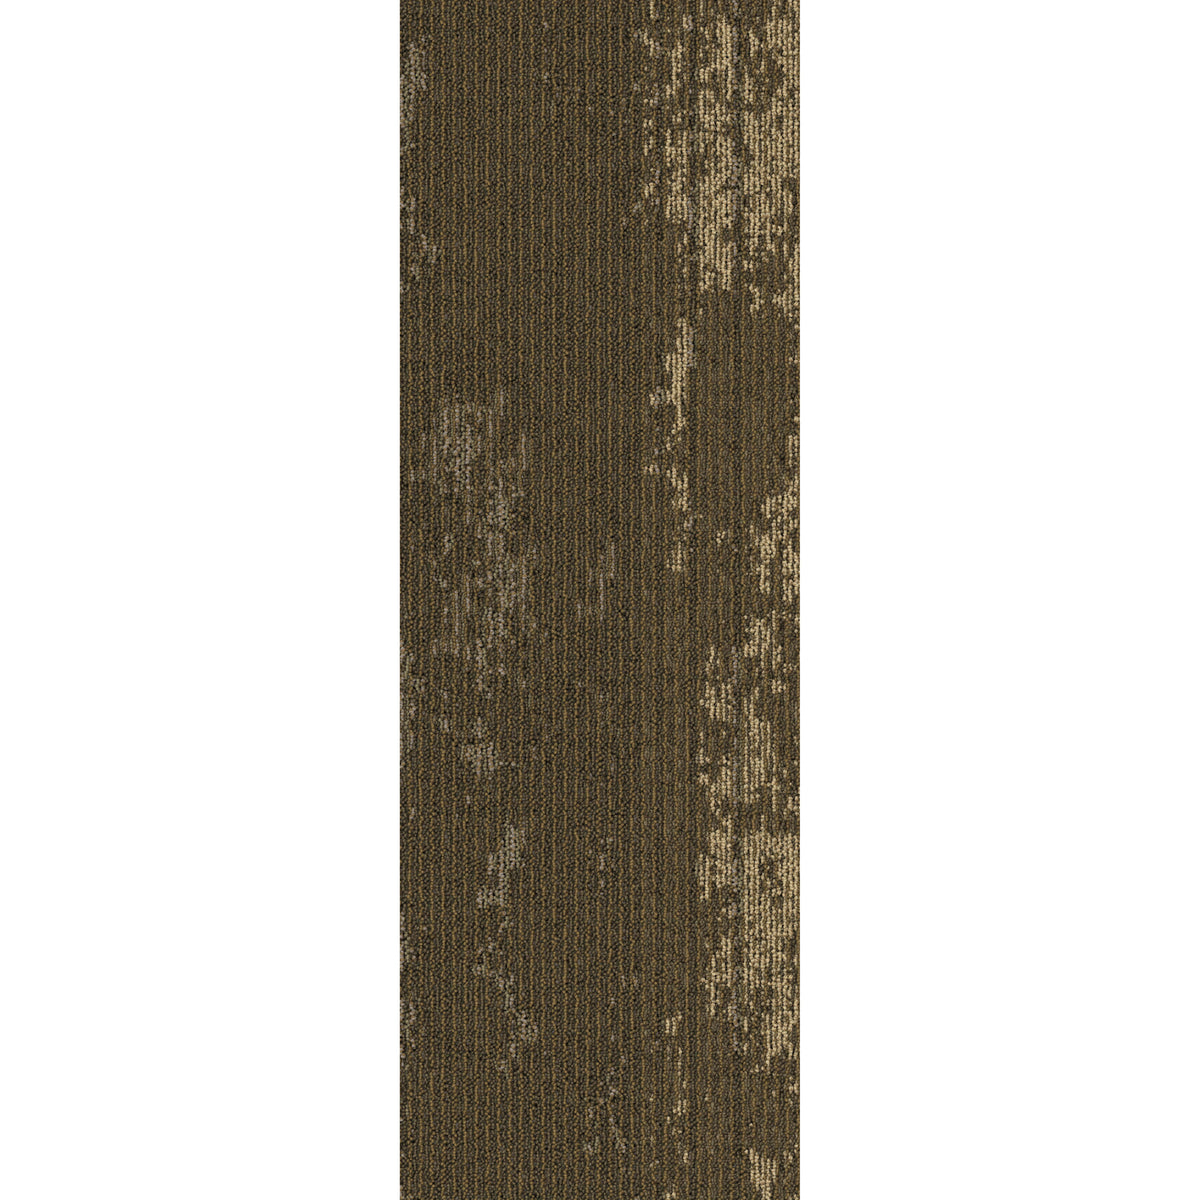 Mohawk Group - Iconic Earth - Metalmorphic - Carpet Tile - Canyon Clay Metallic